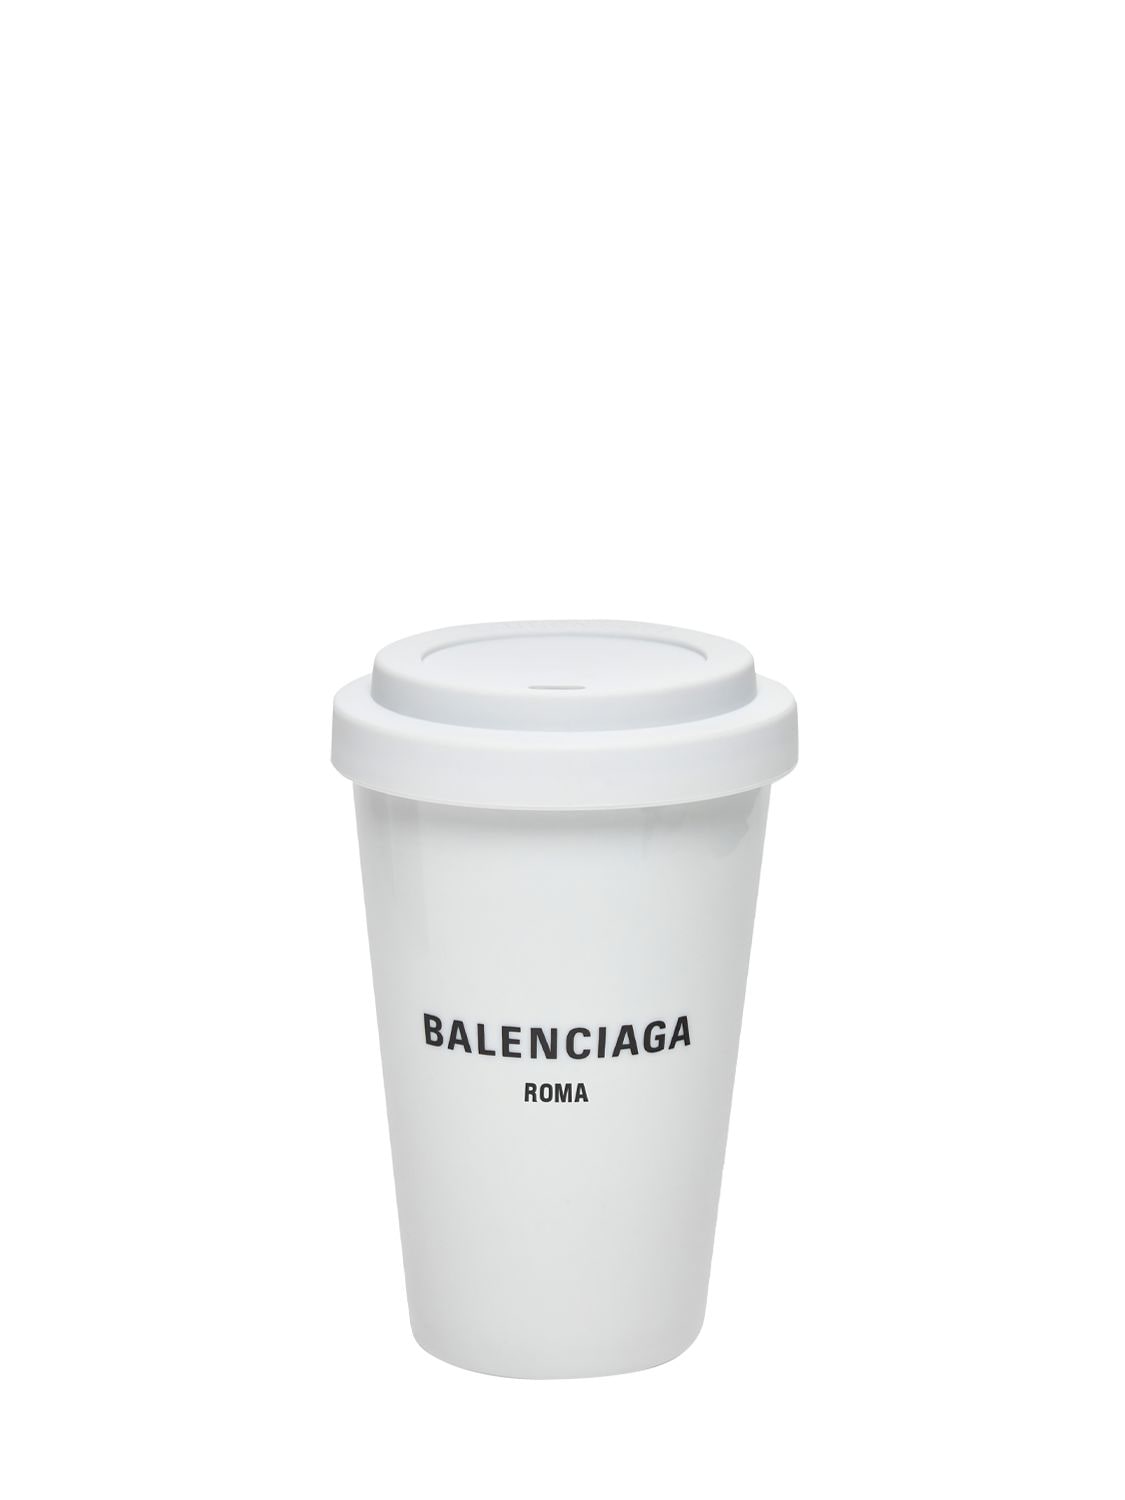 Balenciaga Roma陶瓷咖啡杯 In White